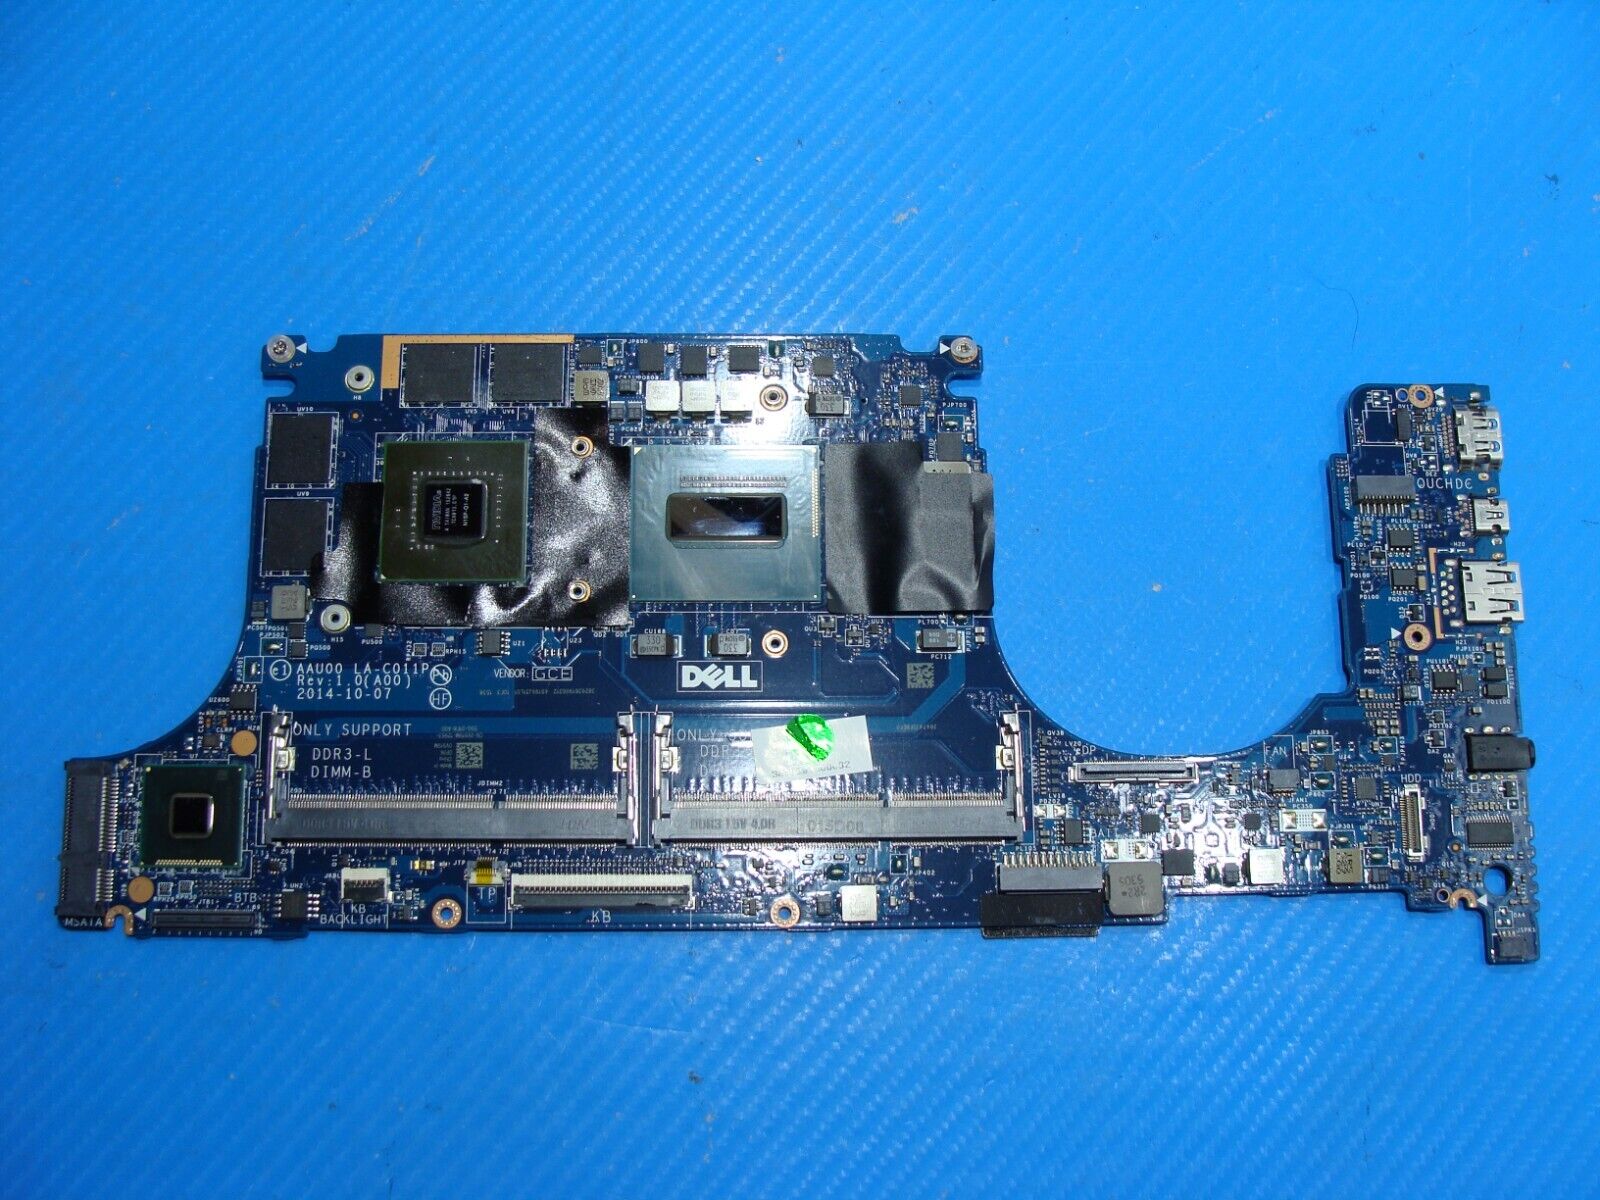 Dell XPS 13.4” 13 9300 i7-4712HQ 2.3GHz 16GB Nvidia K1100M 2GB Motherboard V919M